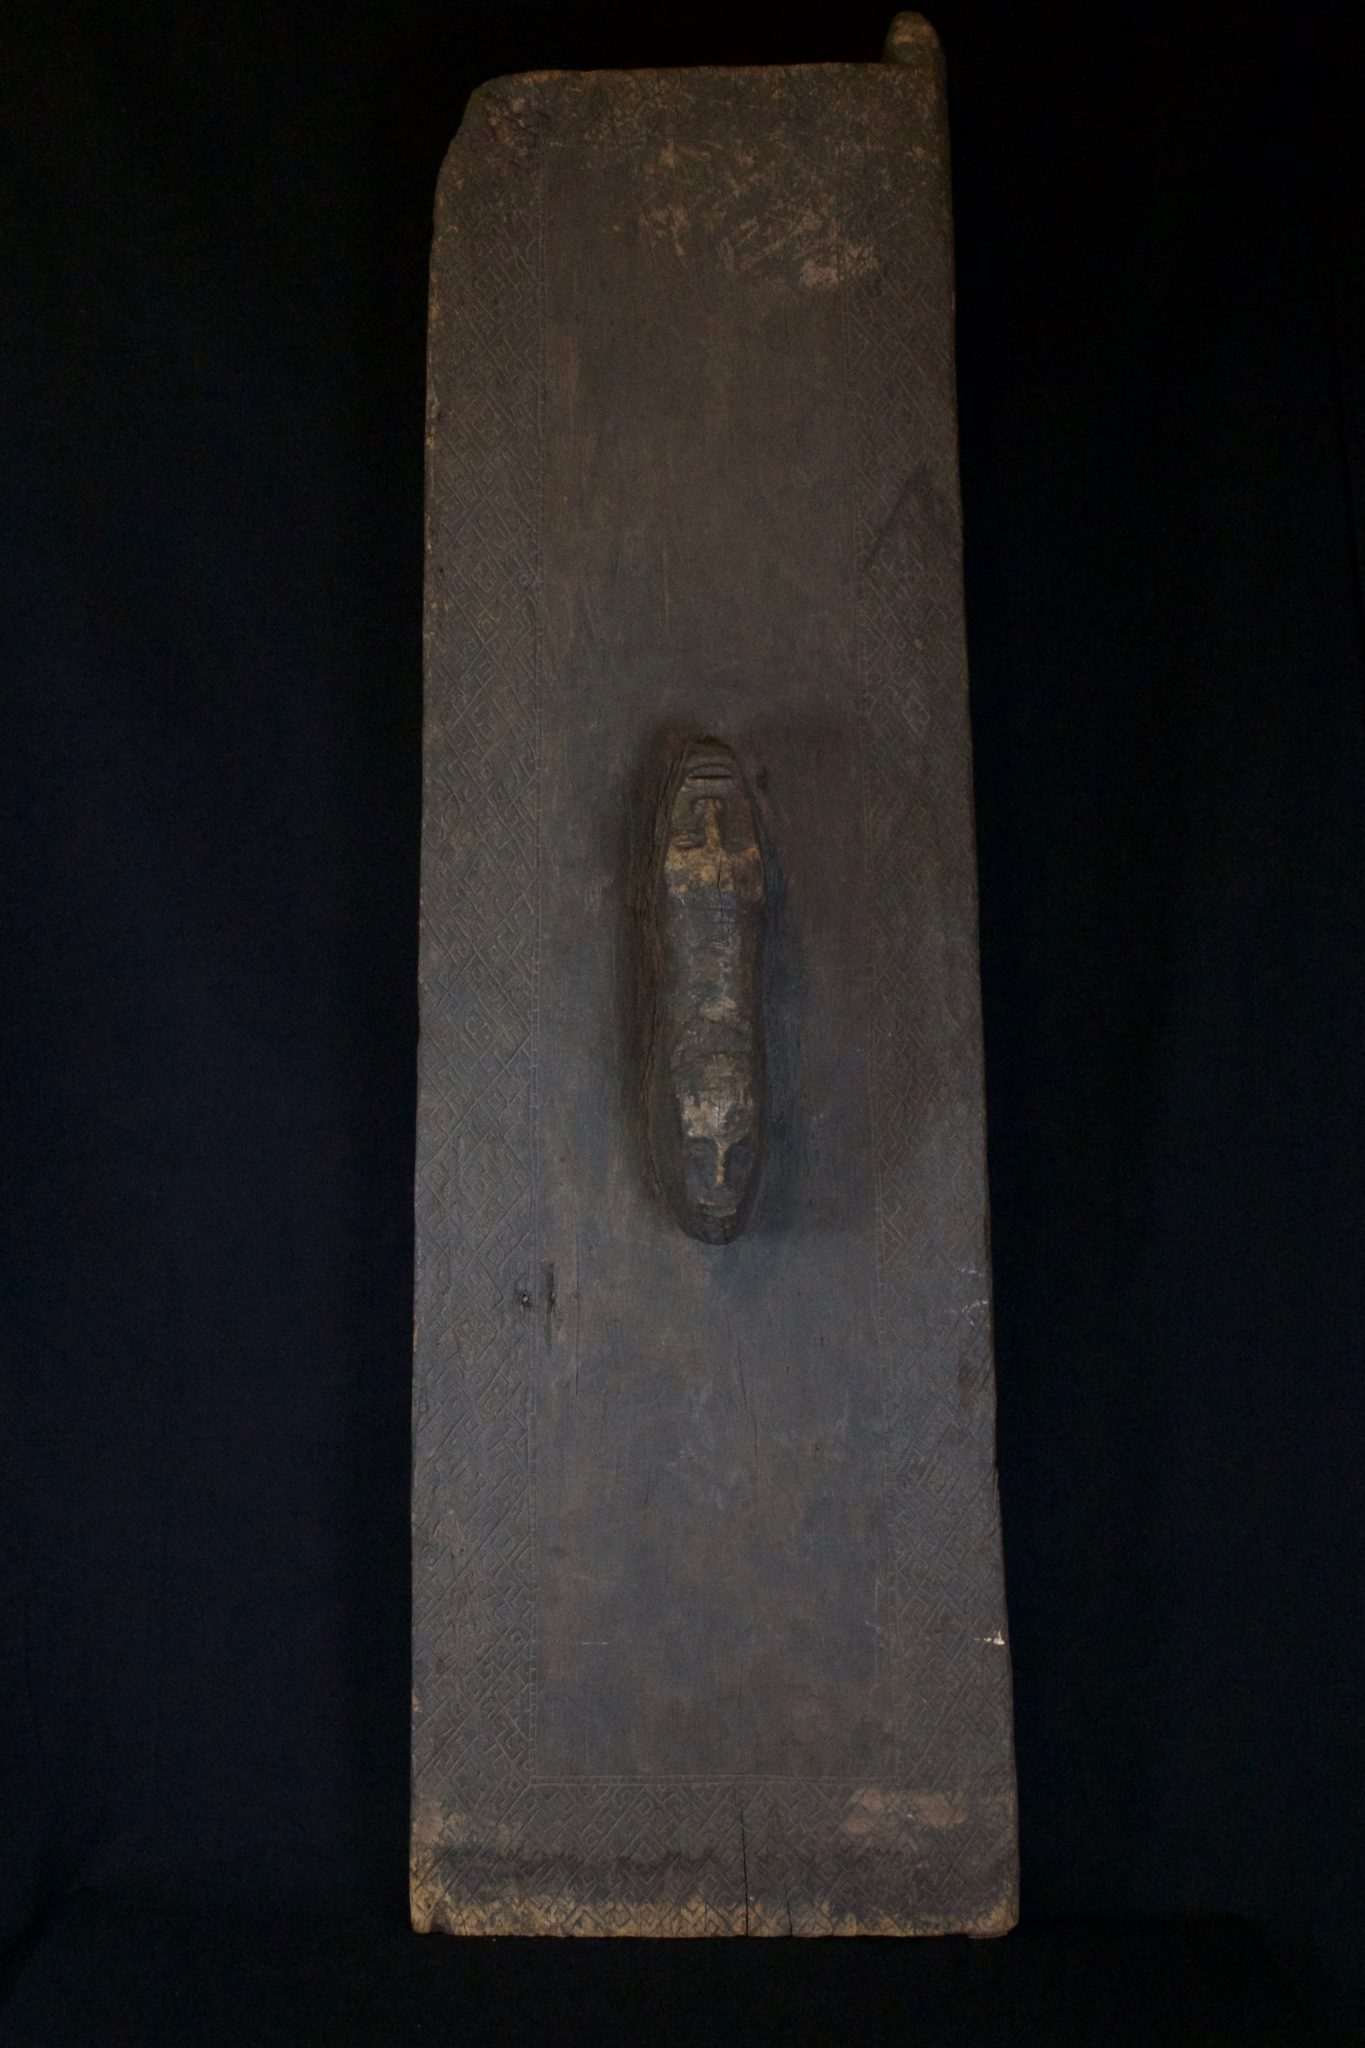 Shaman Ritual Spirit Door, Sumatra, Indonesia, Batak tribe, Late 19th c, Wood, patinated with age and use. 52 ¼” x 16” x 6 ½”, $2200.